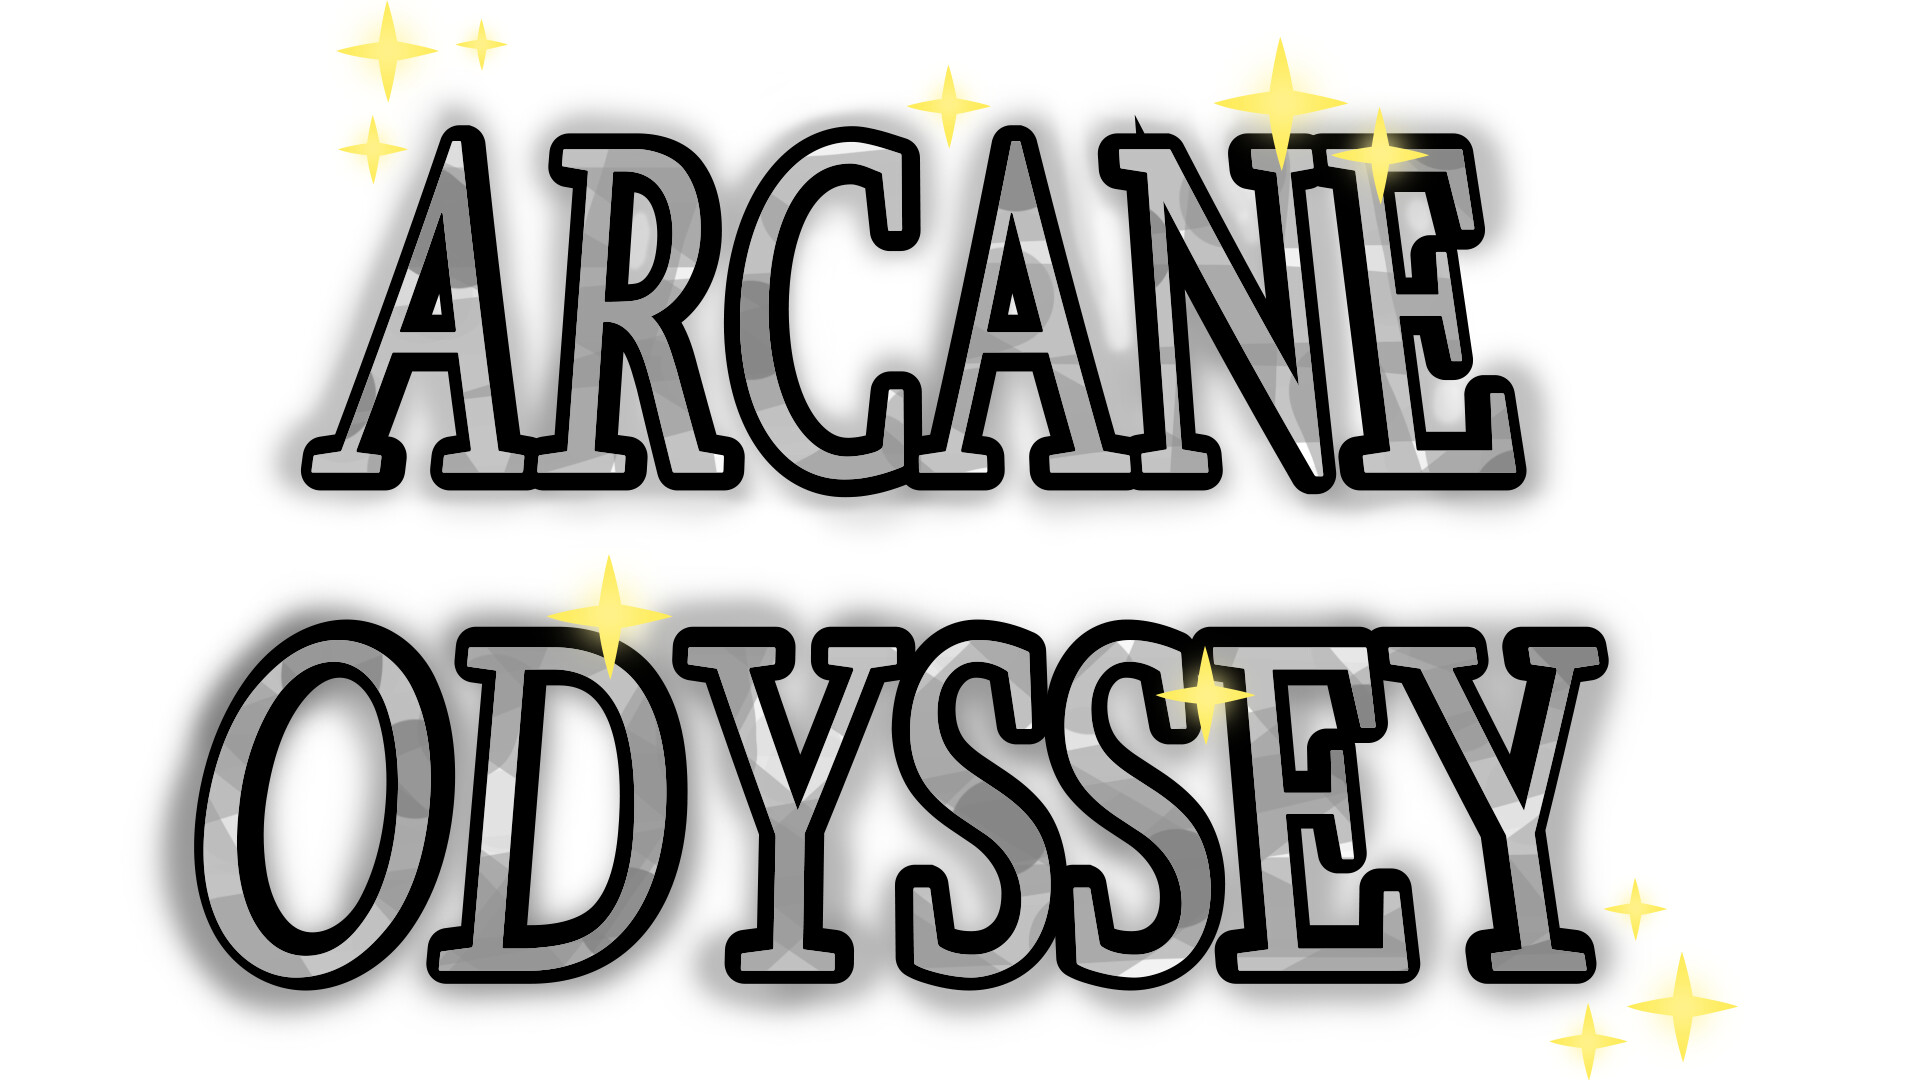 The Arcane Odyssey Logo design concept art - Art - Arcane Odyssey